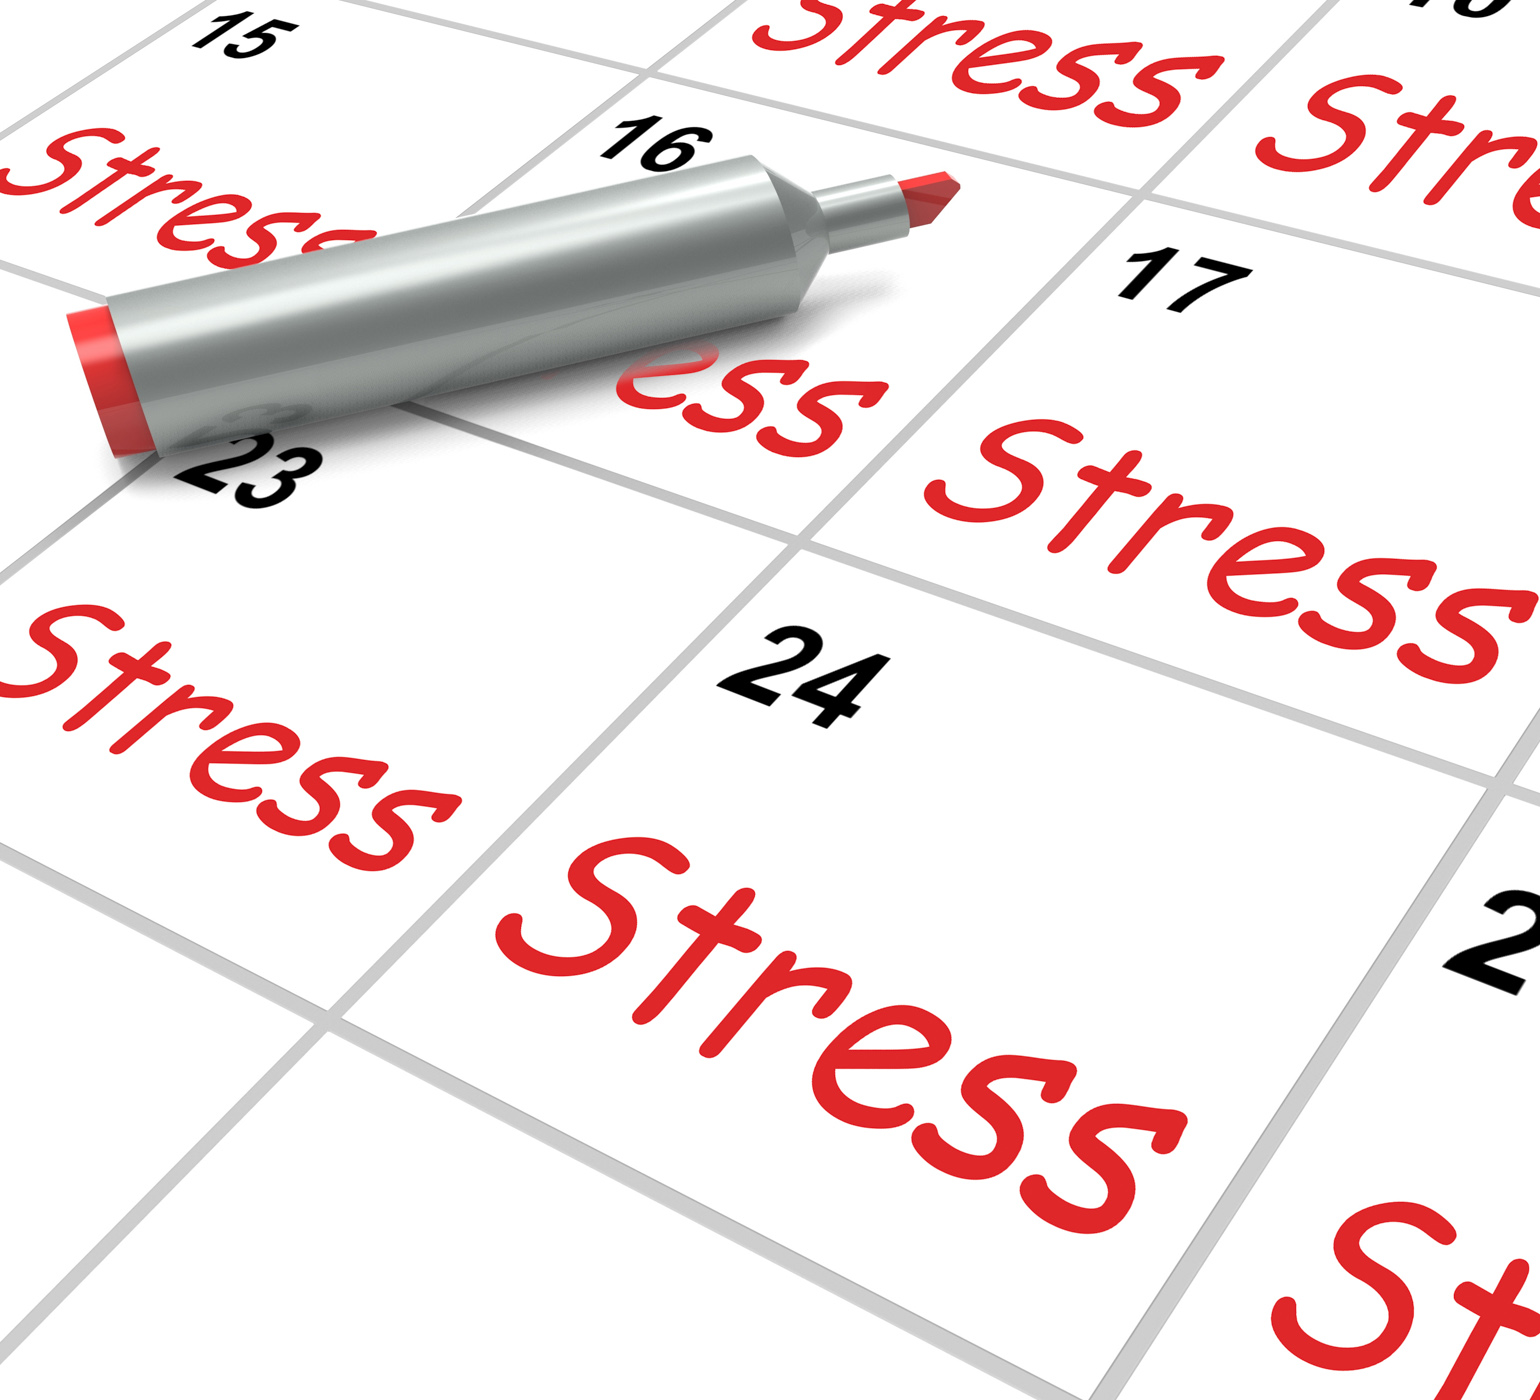 Stress calendar means pressured tense and anxious photo